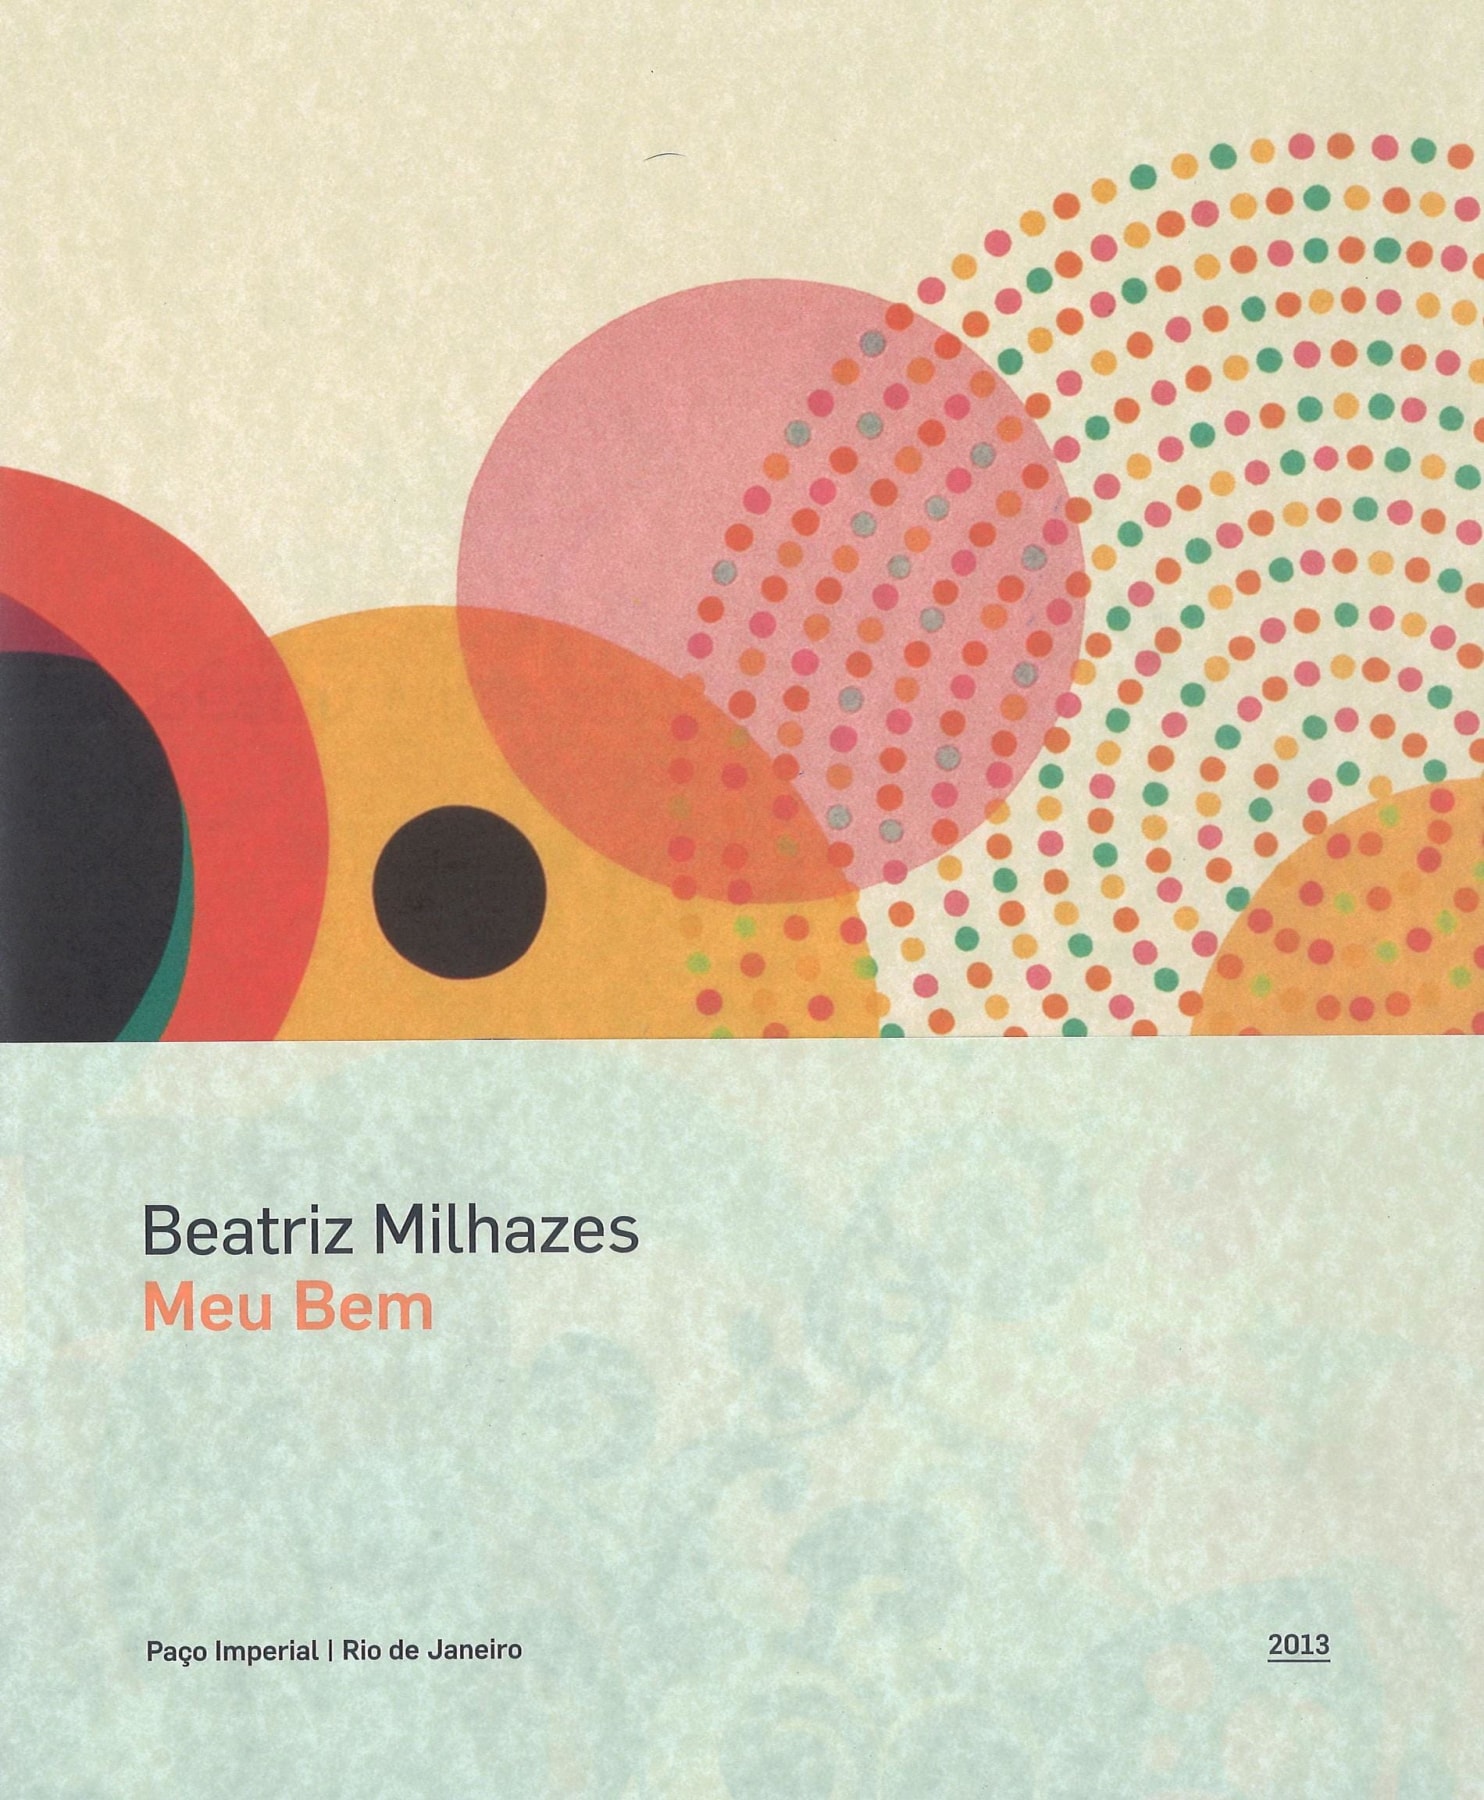 Beatriz Milhazes: Meu Bem